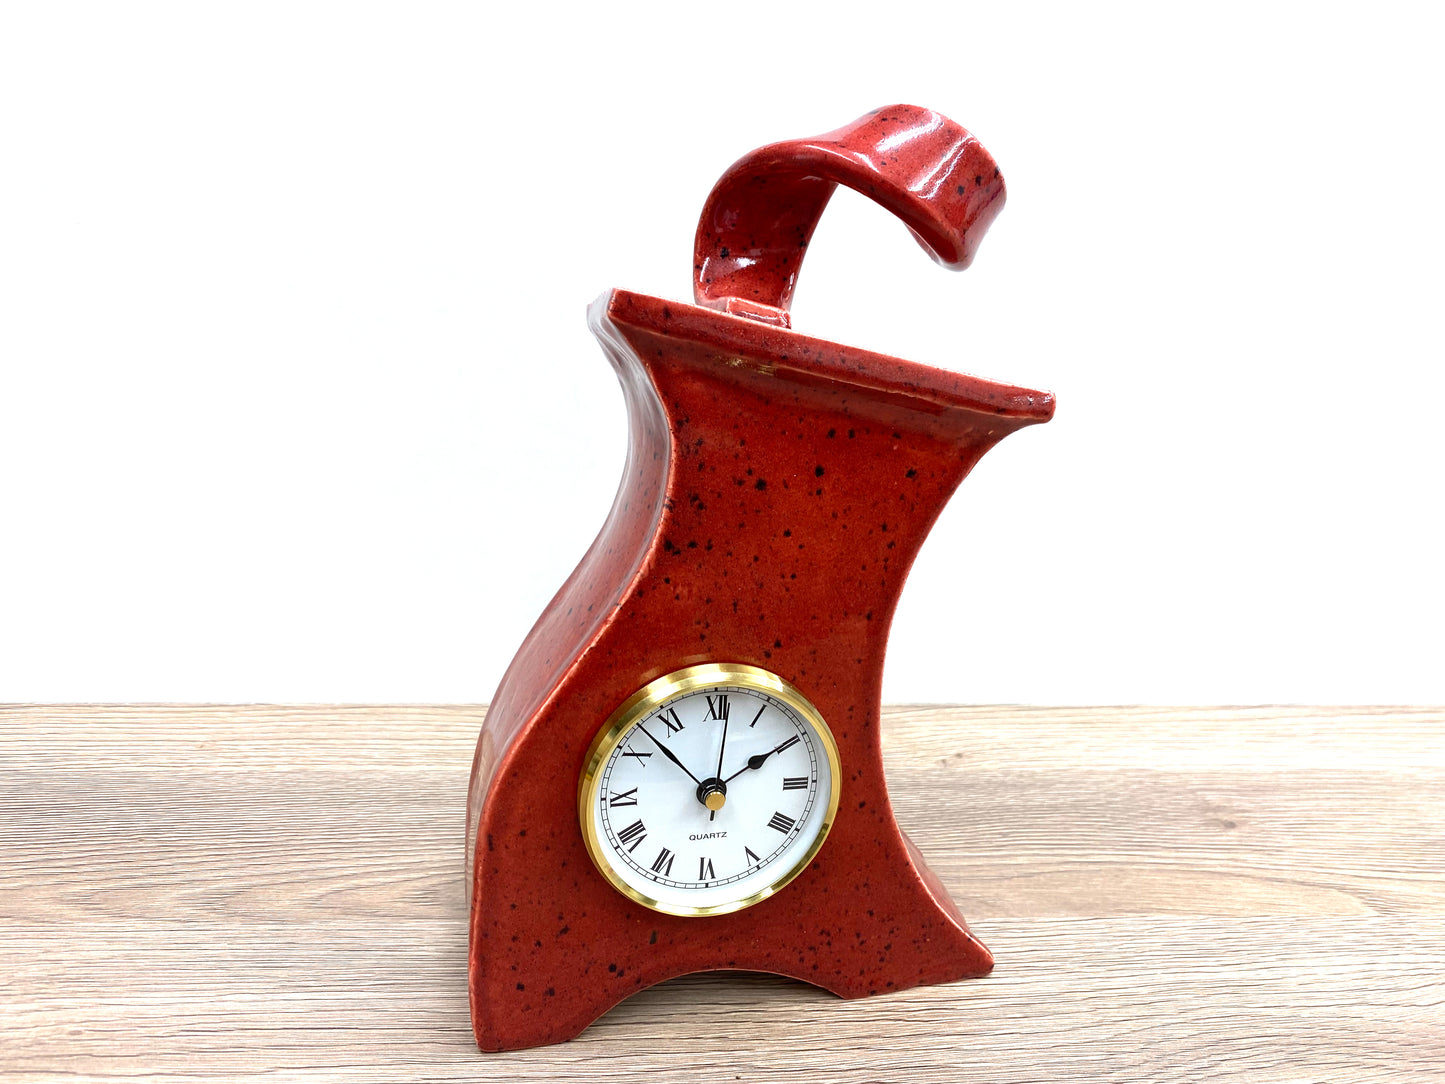 speckled red mantel clock for tabletop or shelf